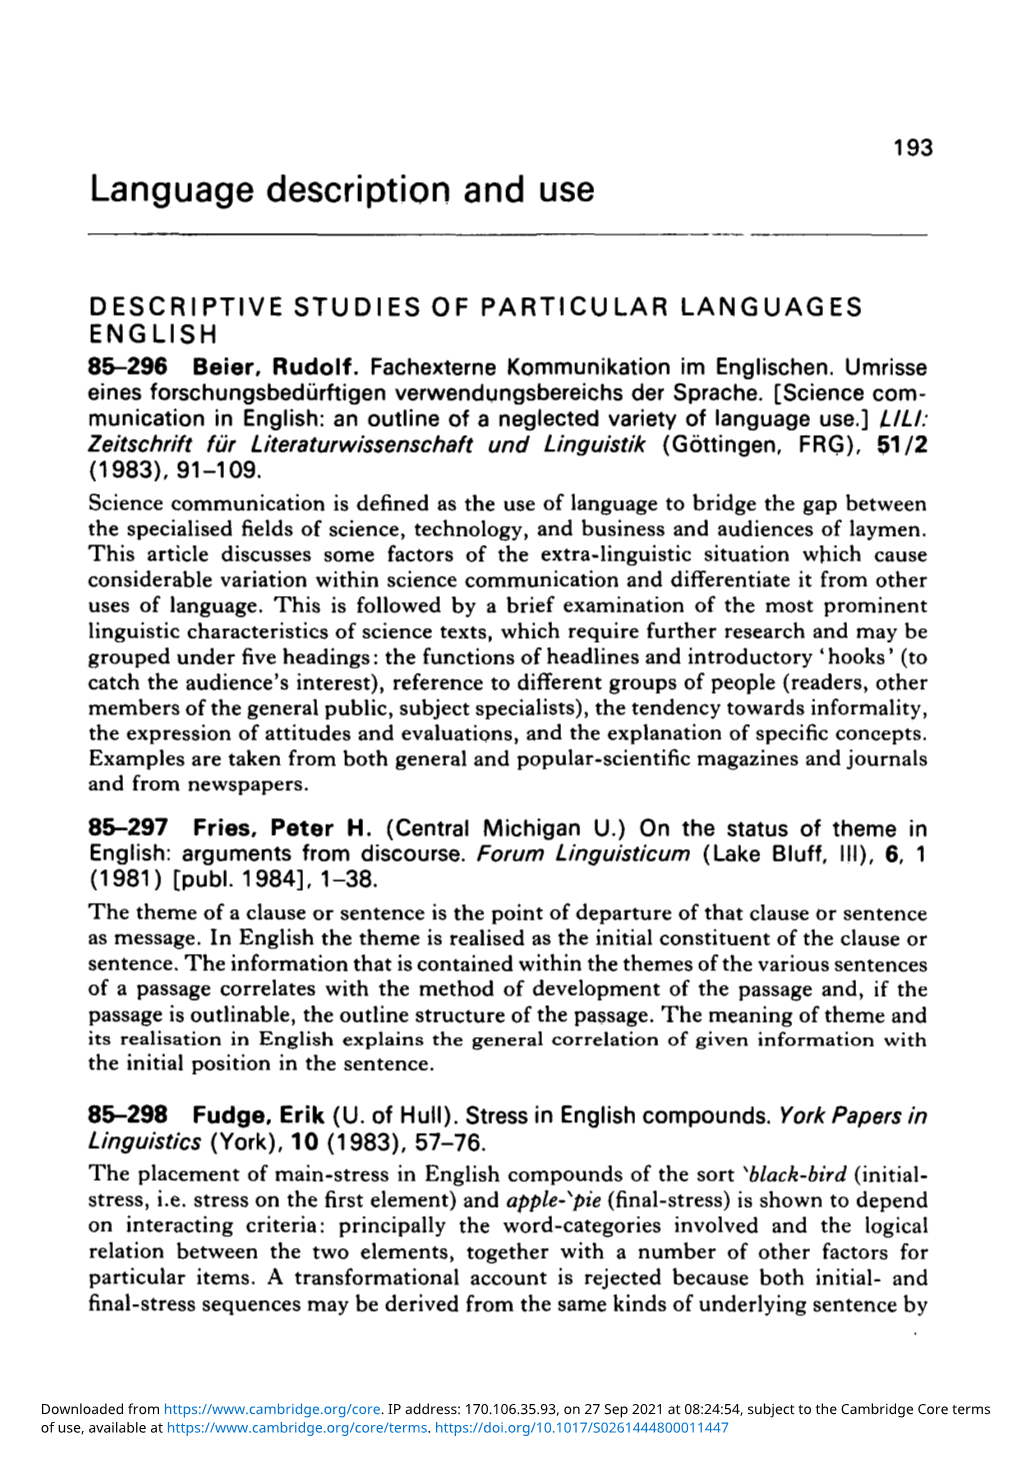 Language Description and Use